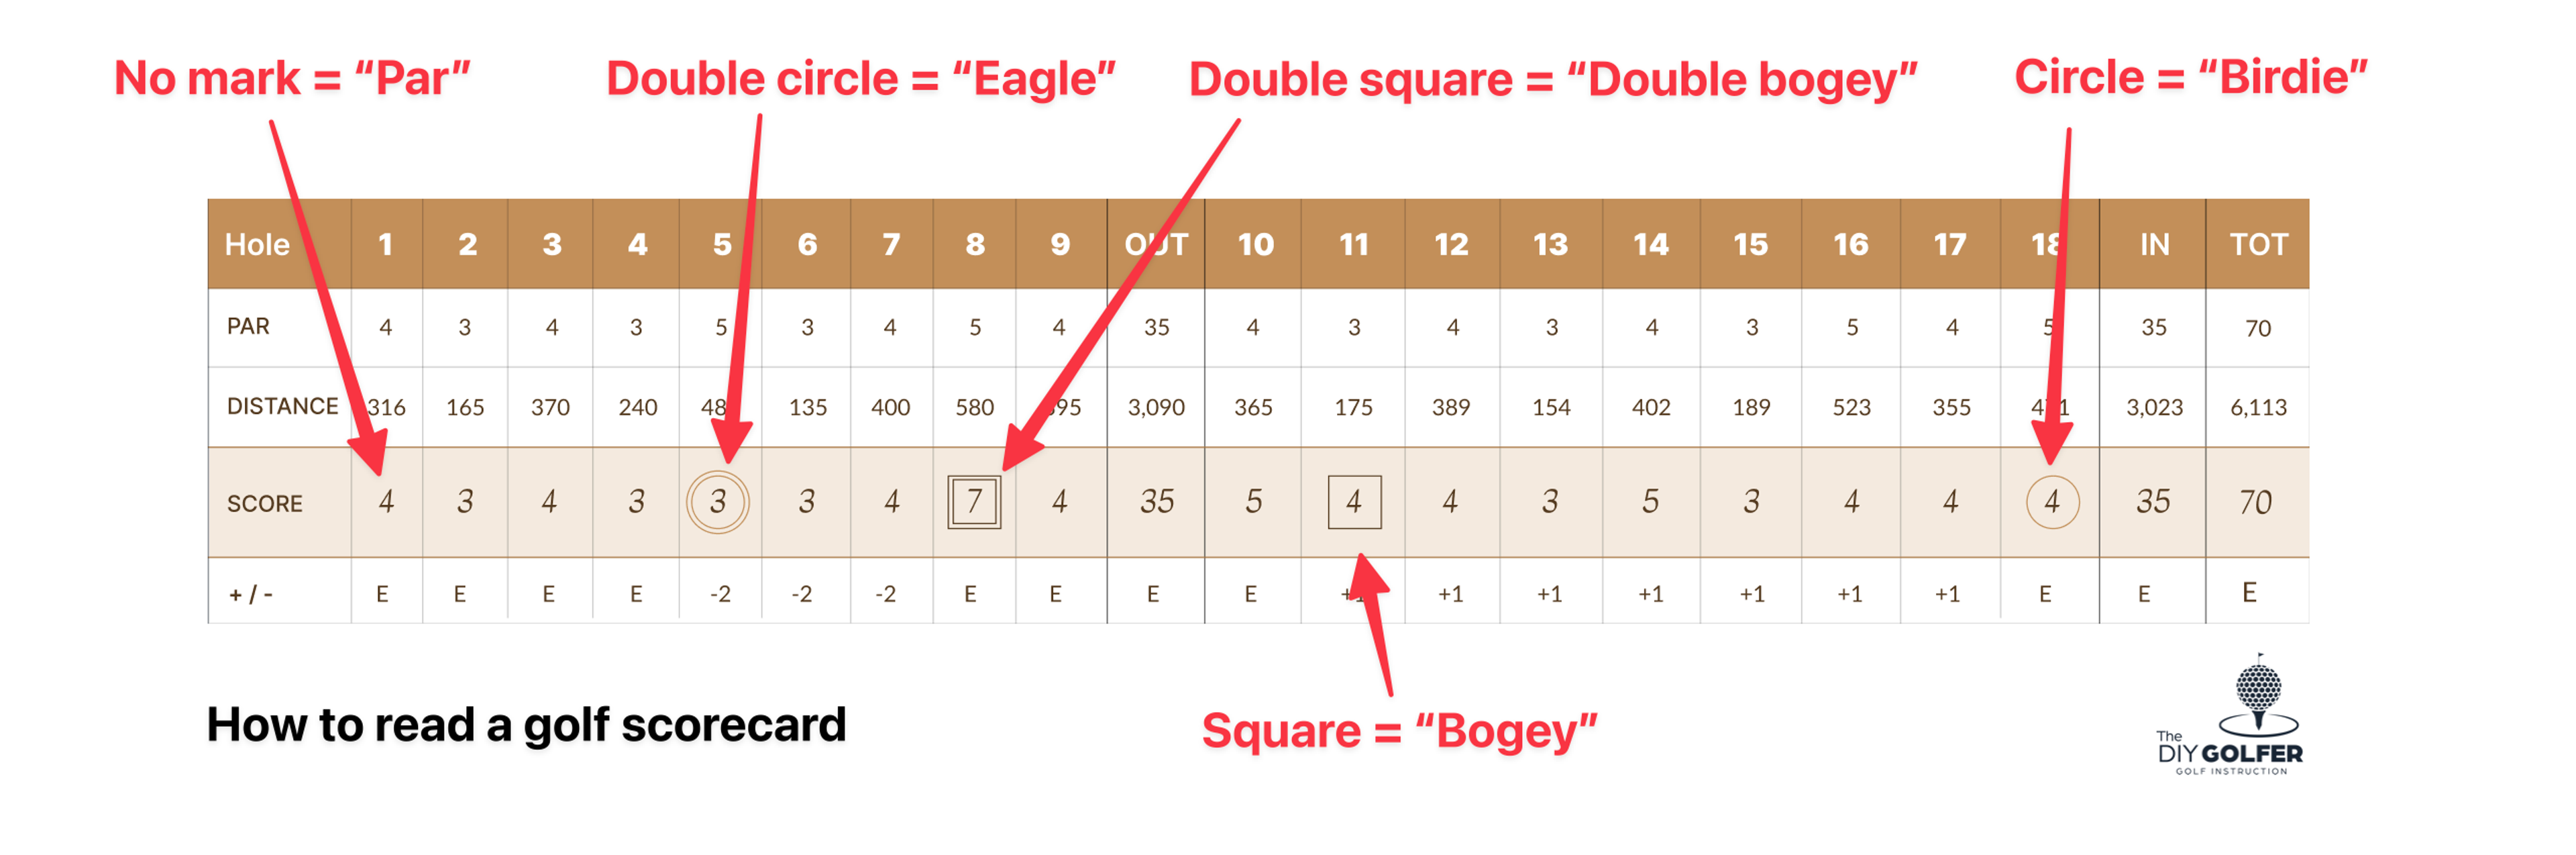 Golf Scorecard Symbols Graphic: What each Mark Means